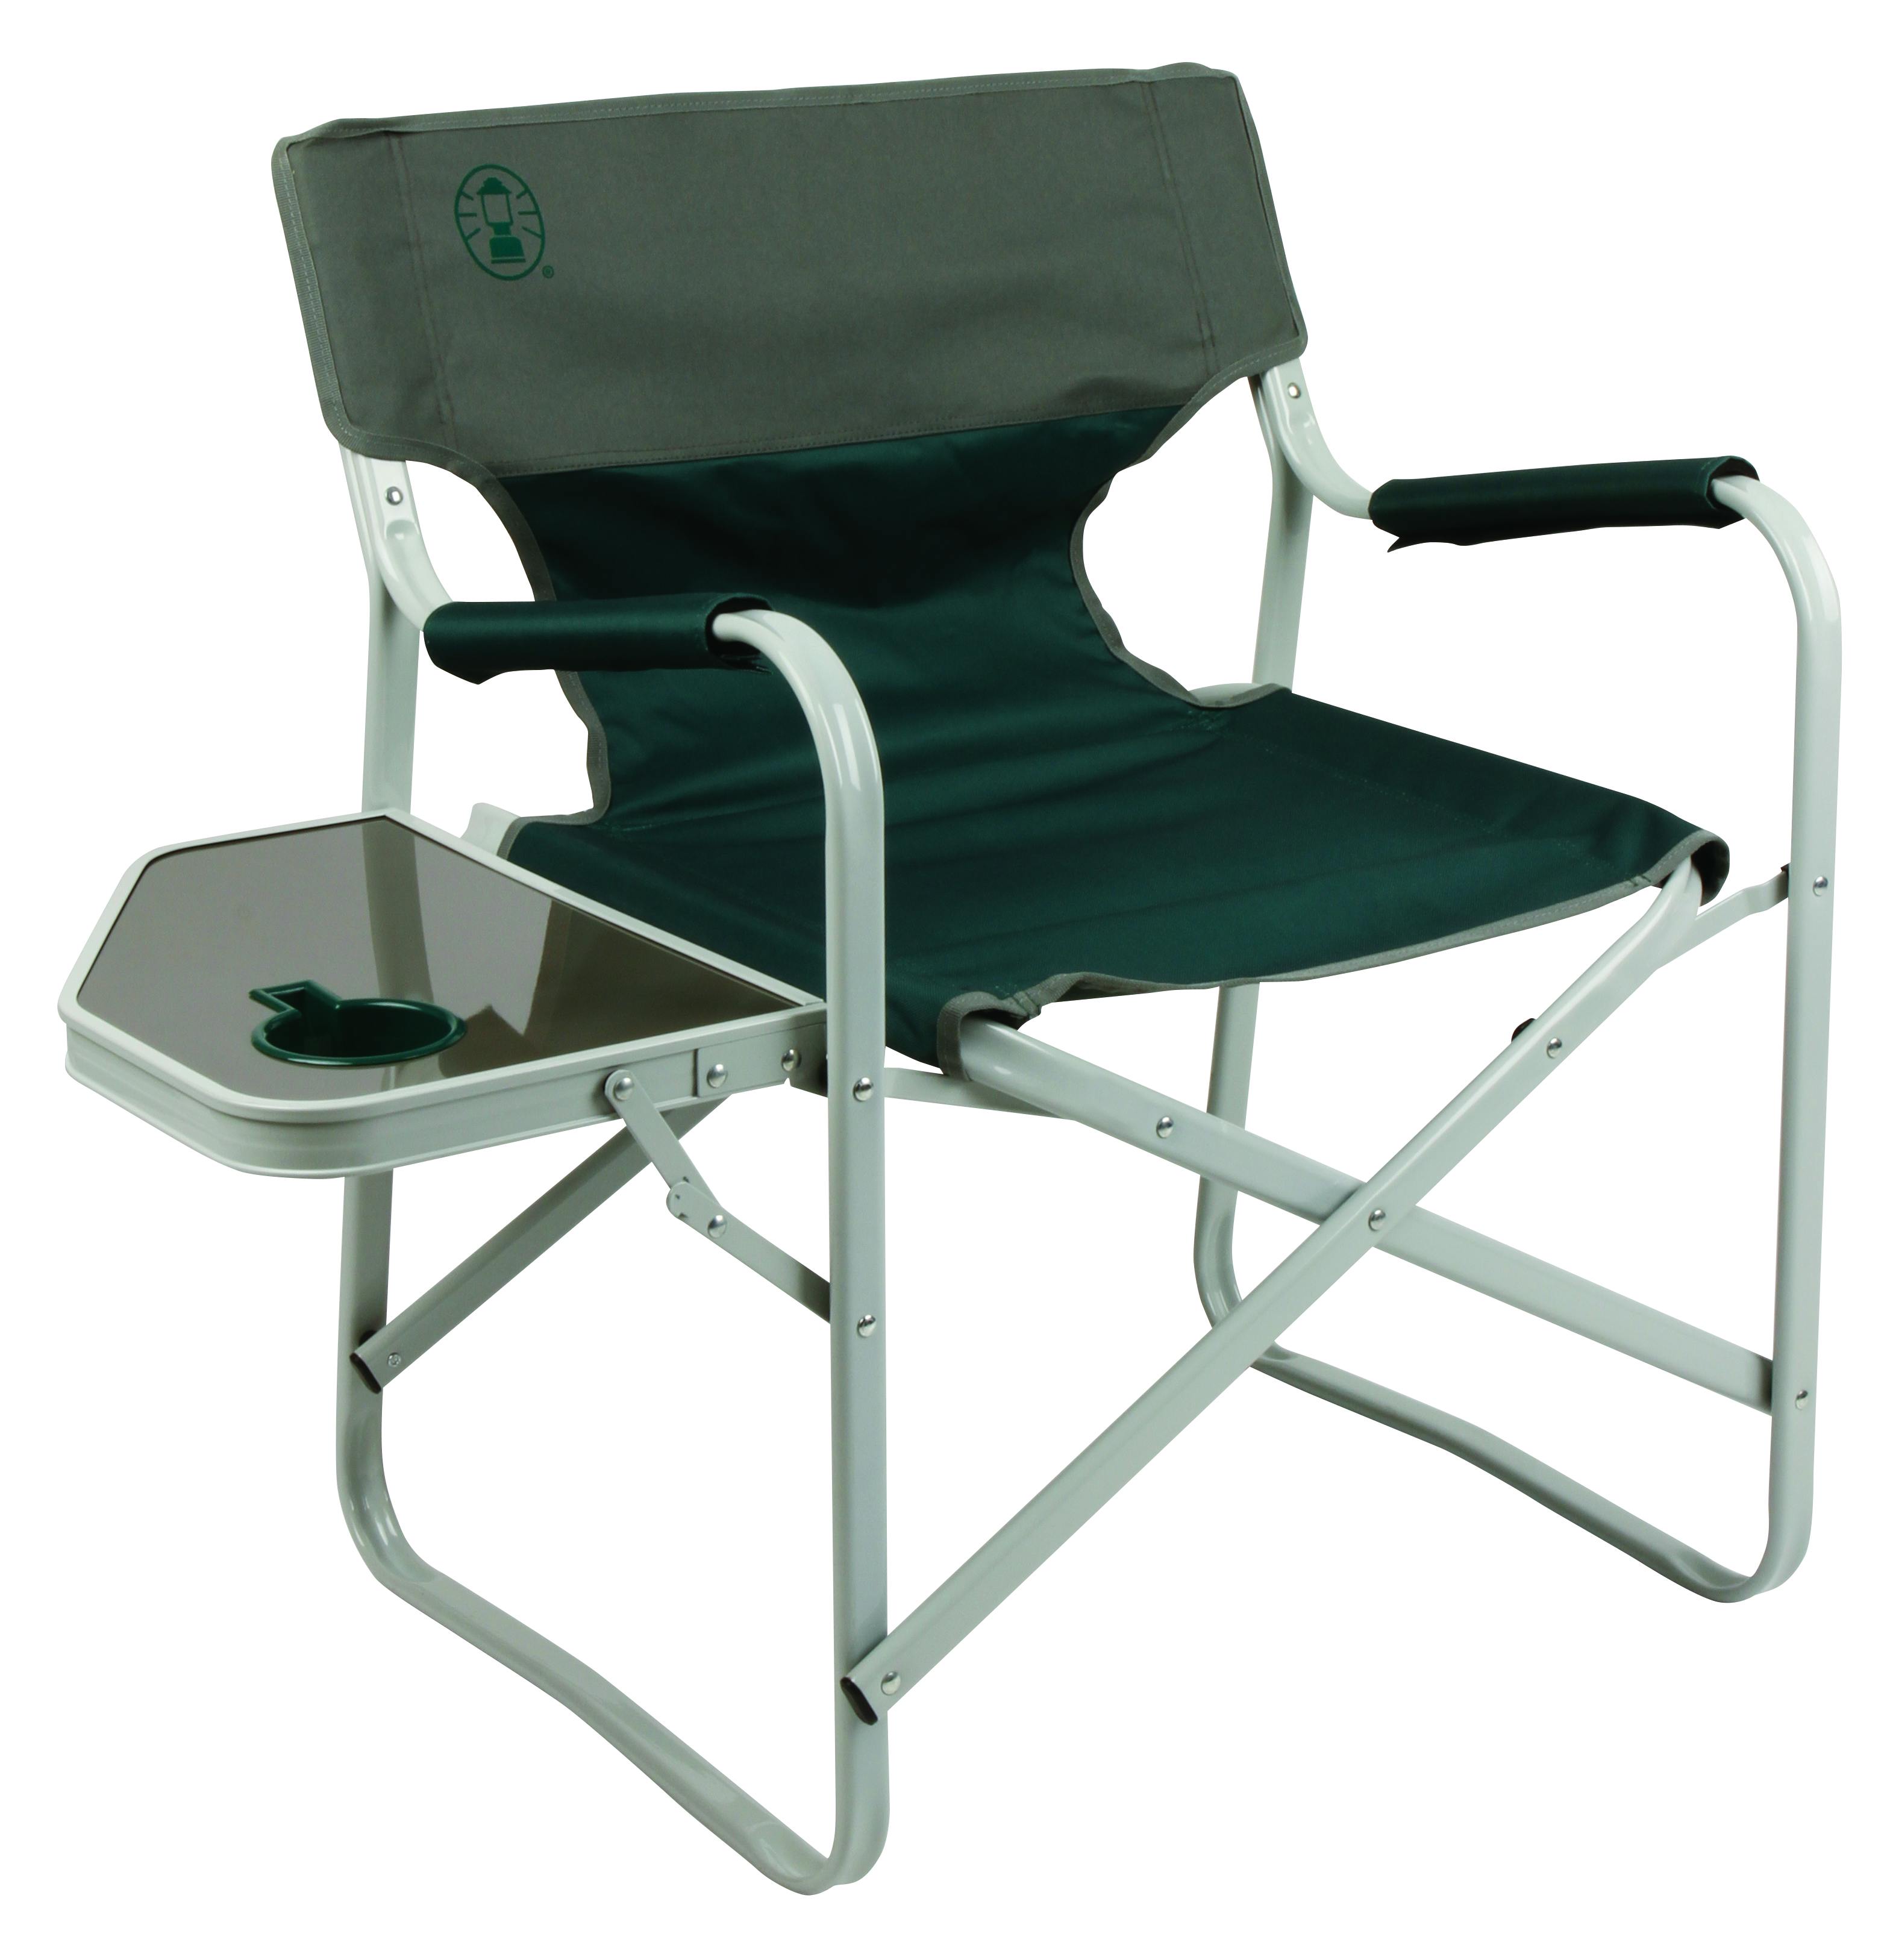 Outpost™ Elite Deck Chair | Coleman